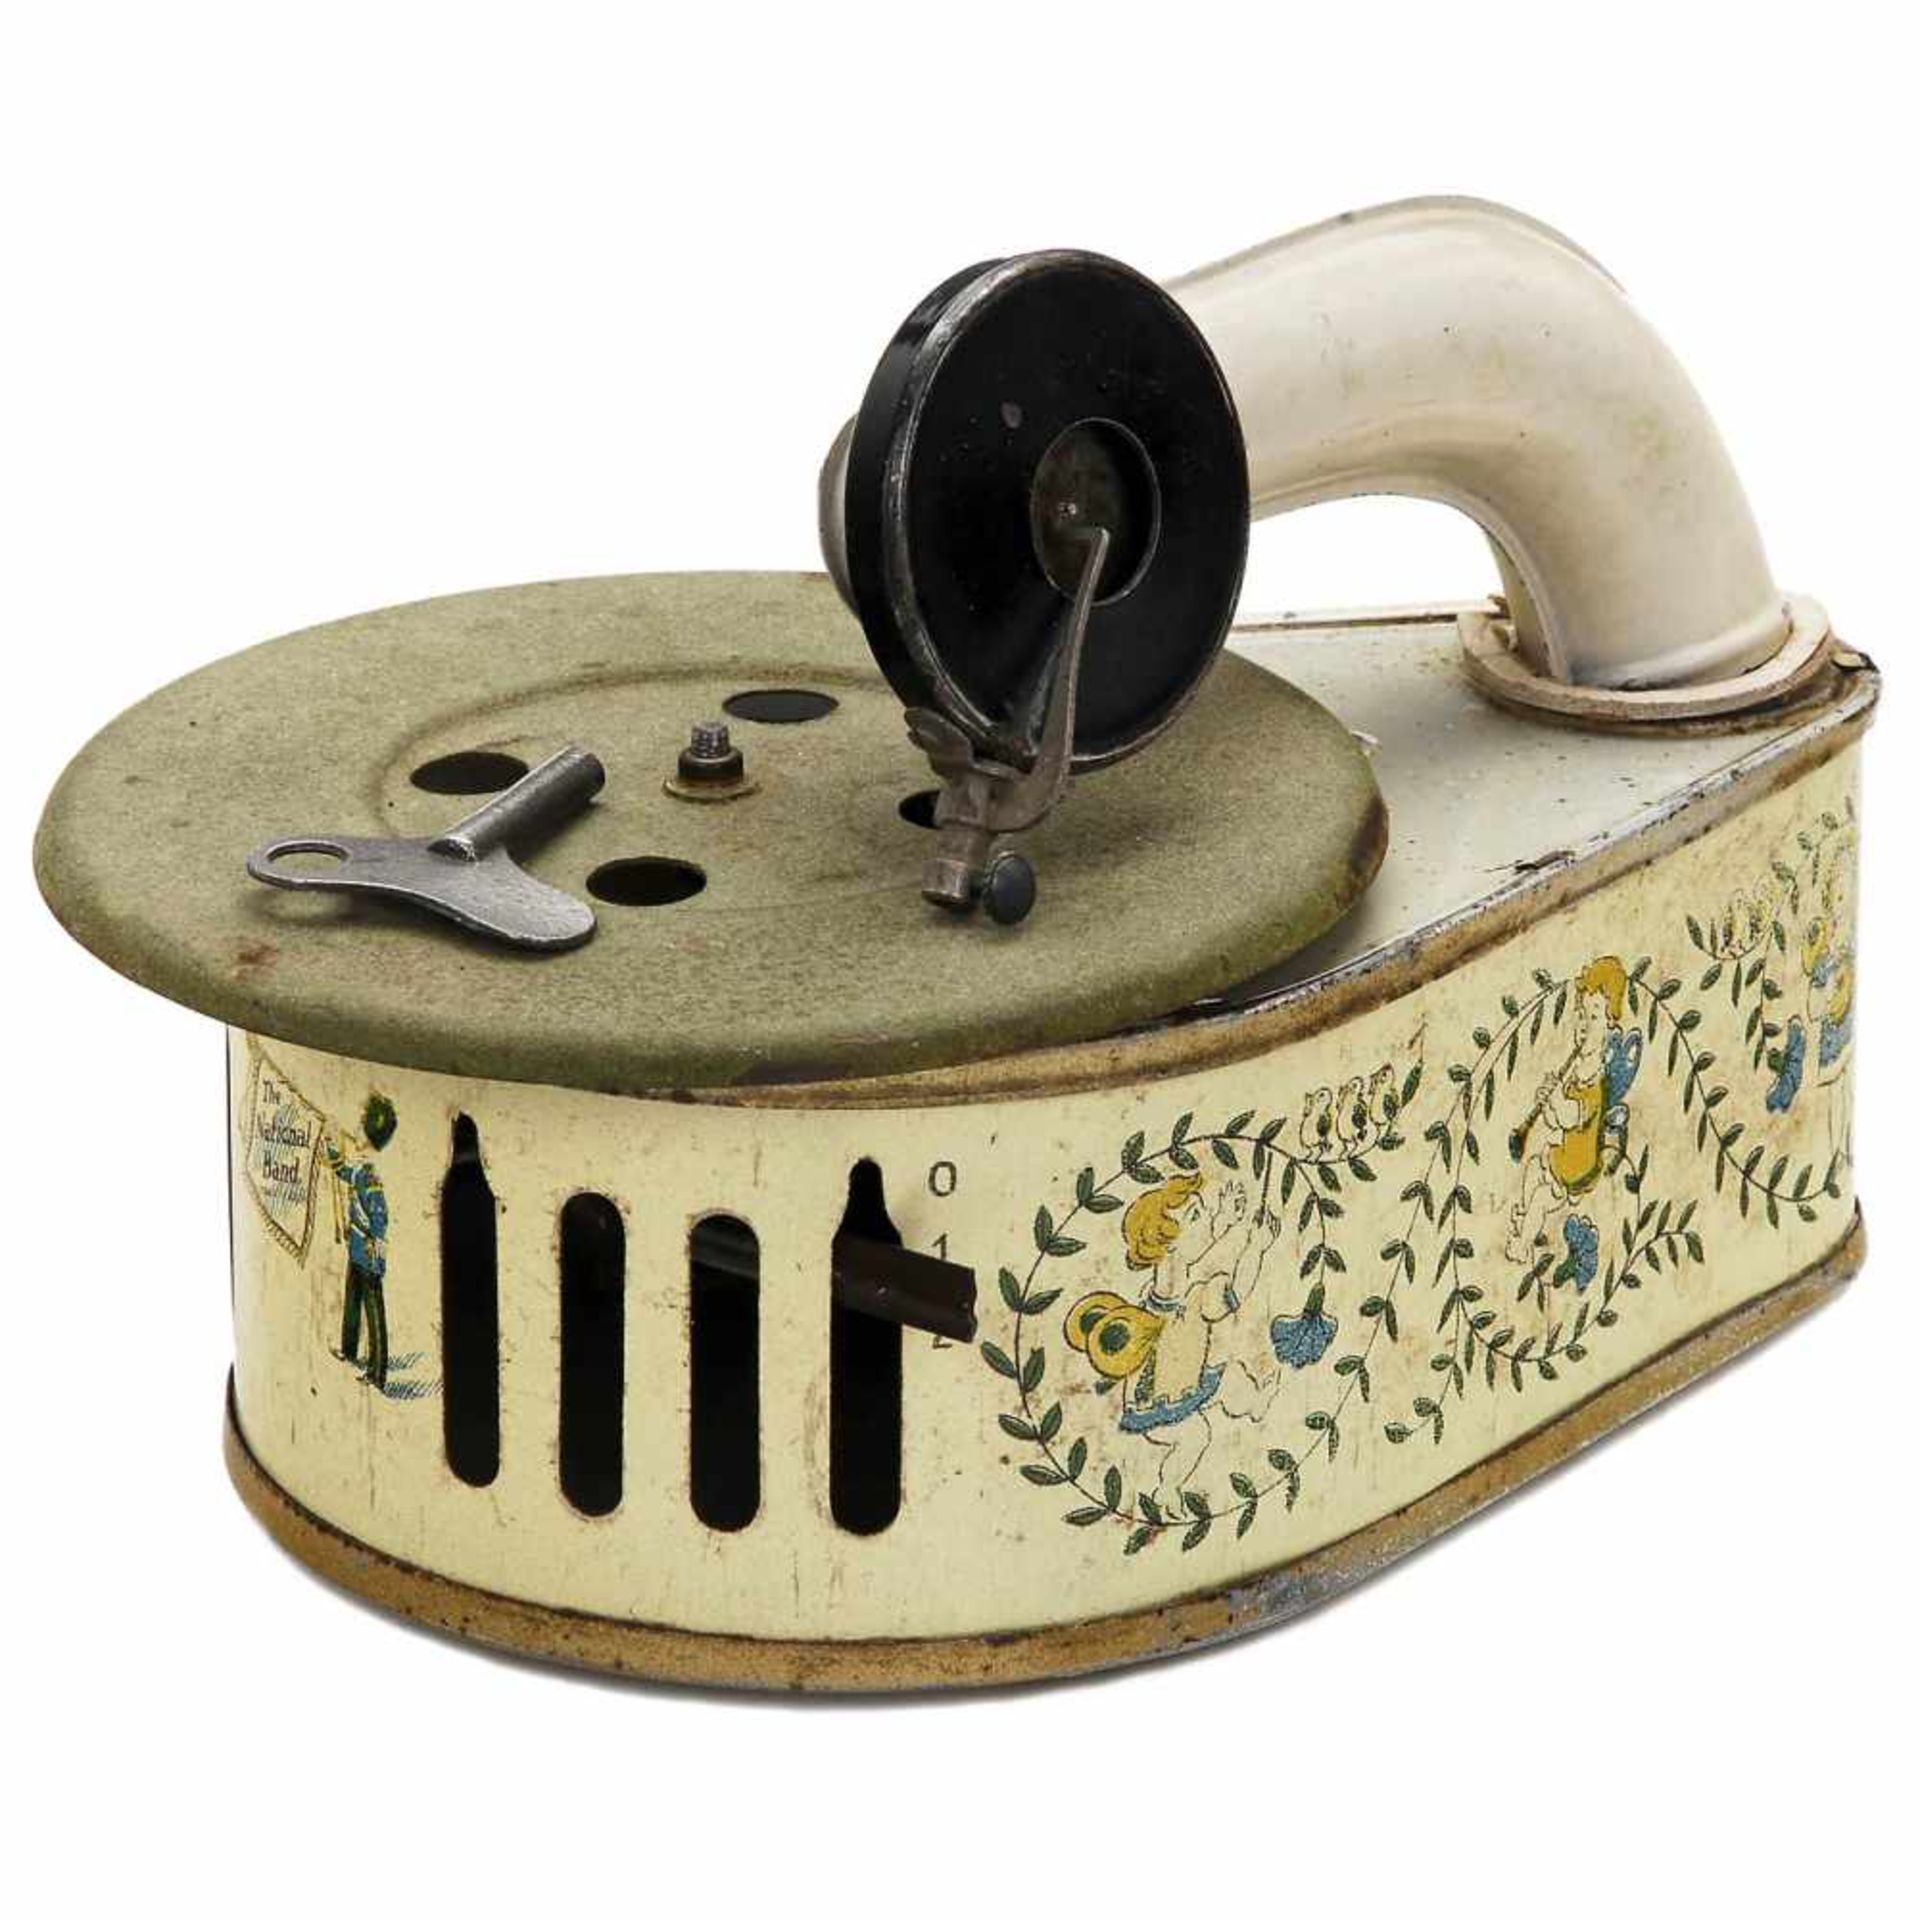 Spielzeug-Grammophon "The National Band", um 1925